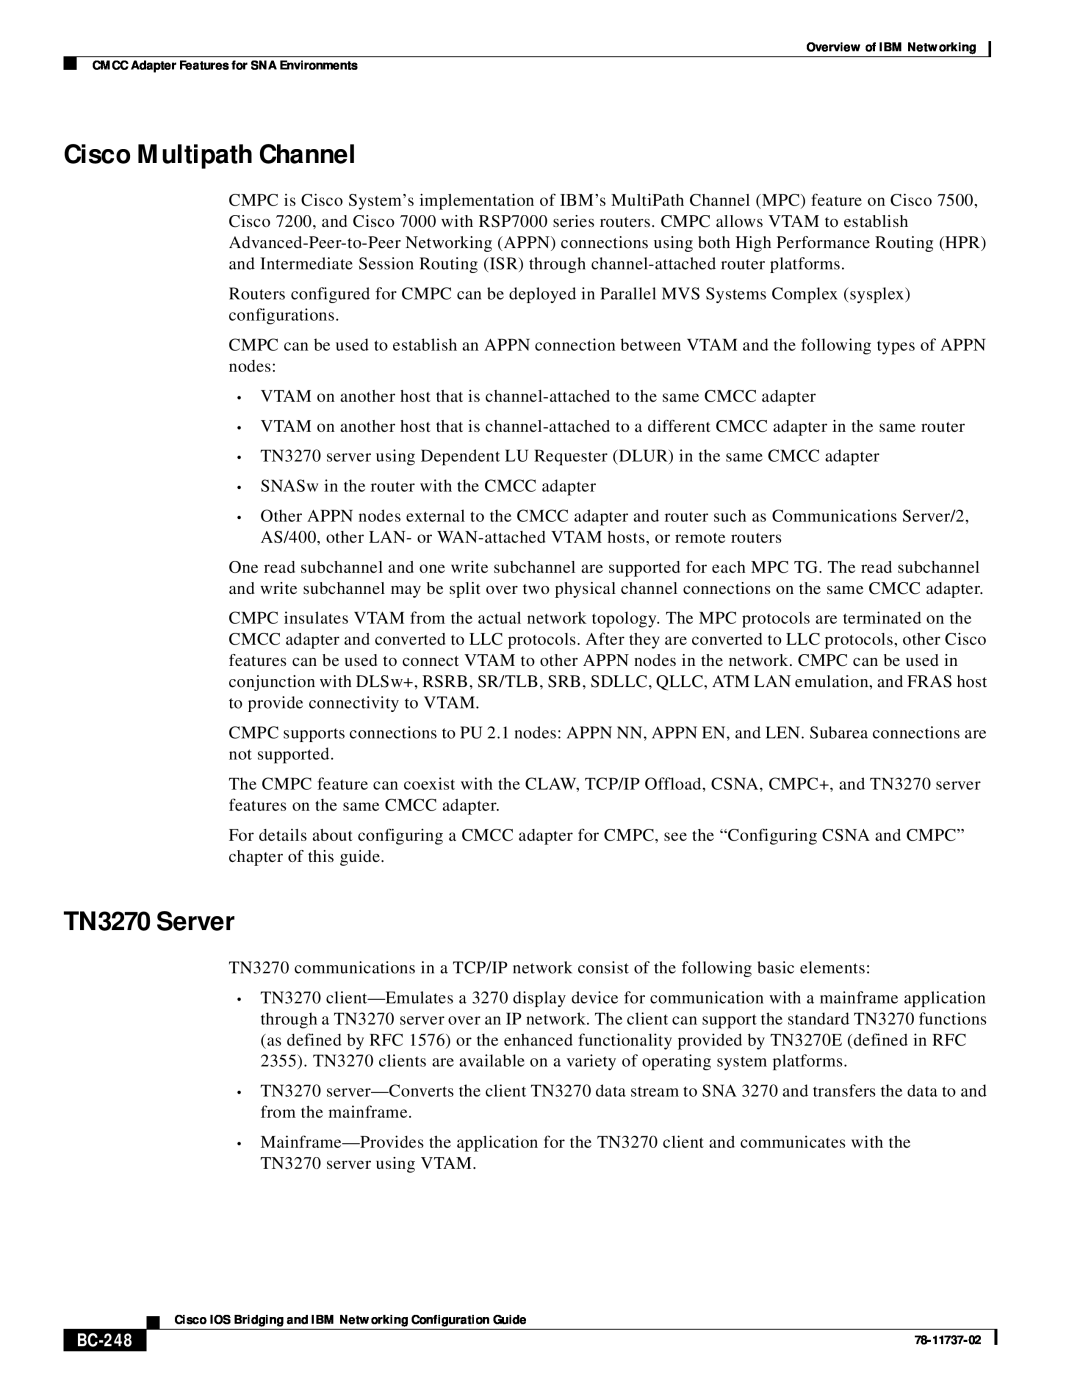 IBM BC-201 manual Cisco Multipath Channel, TN3270 Server, BC-248 